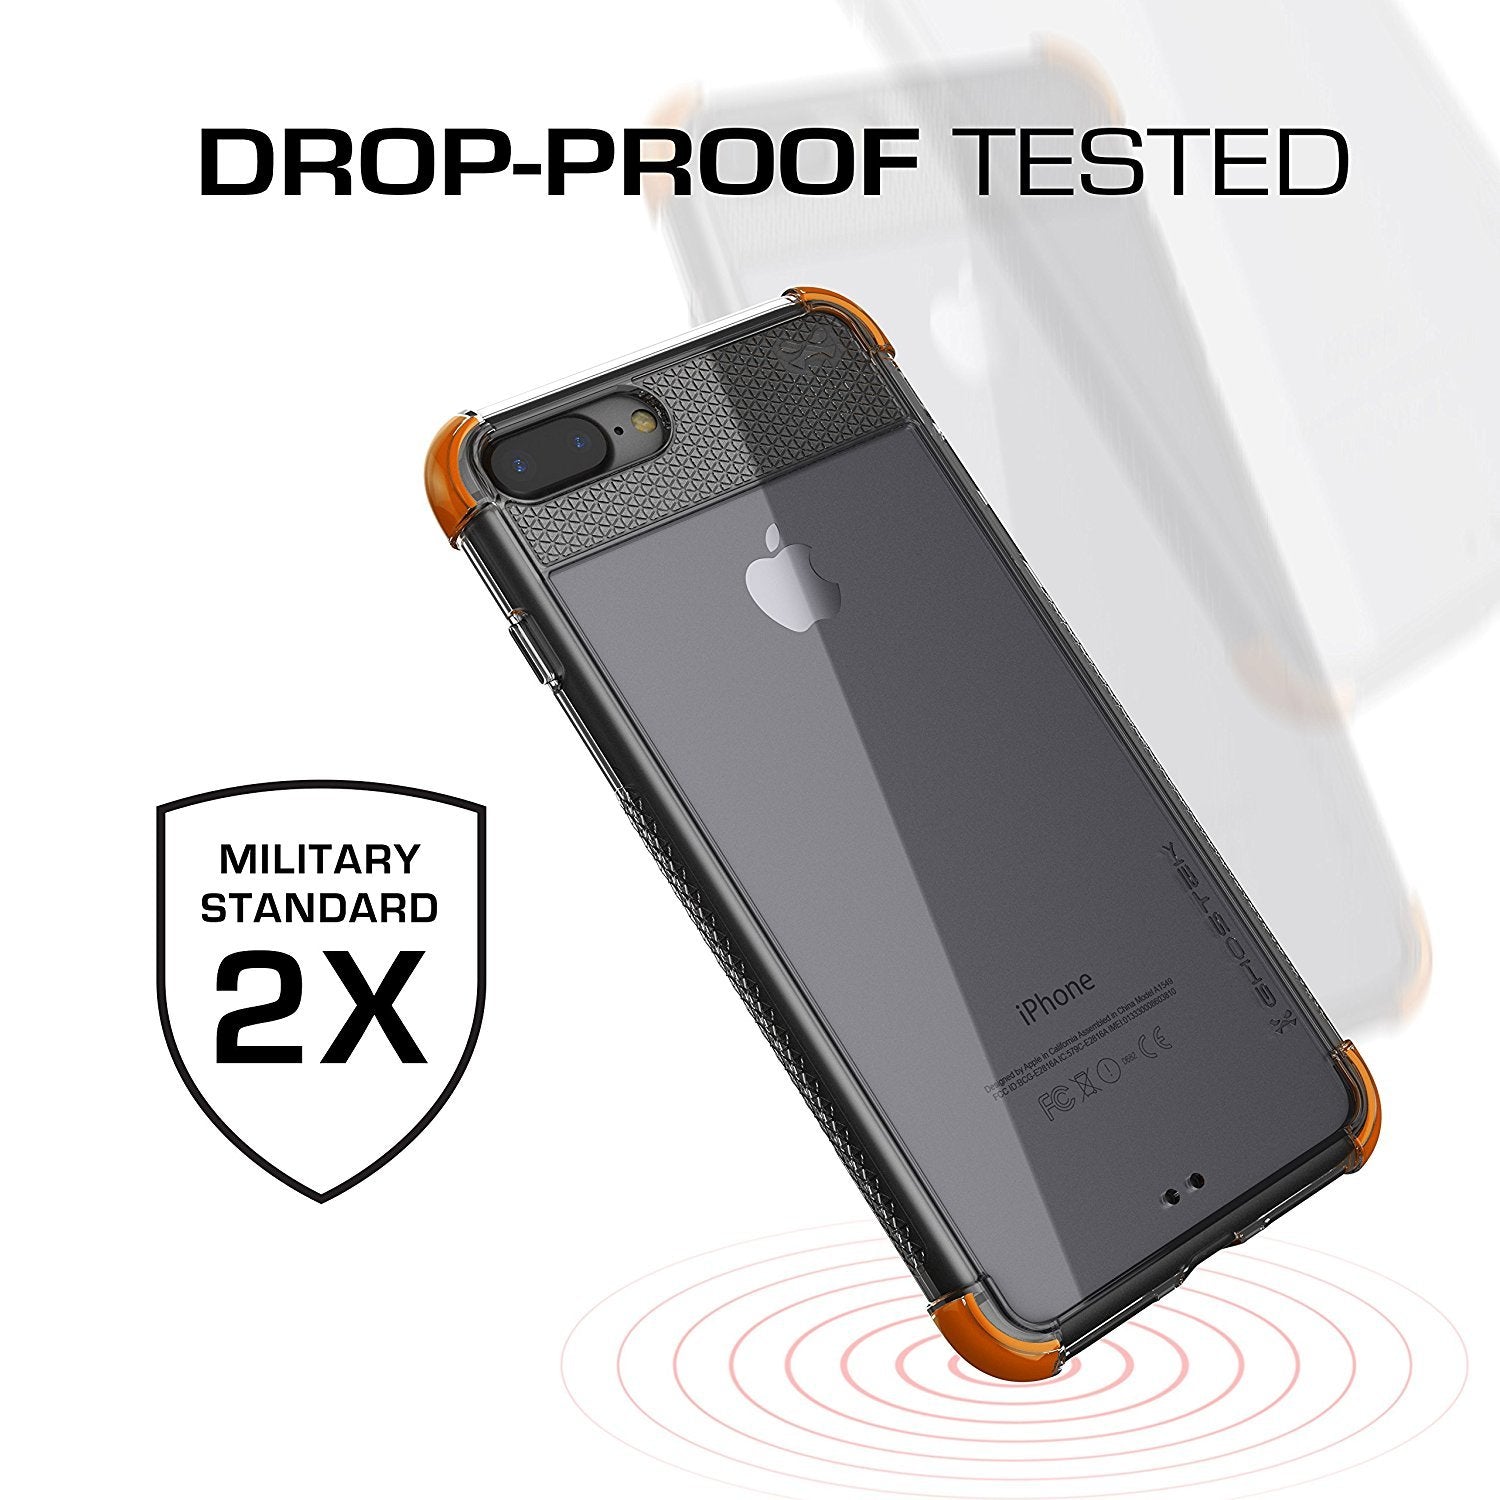 iPhone 8+ Plus Case, Ghostek Covert 2 Series for iPhone 8+ Plus Protective Case [ Orange] - PunkCase NZ